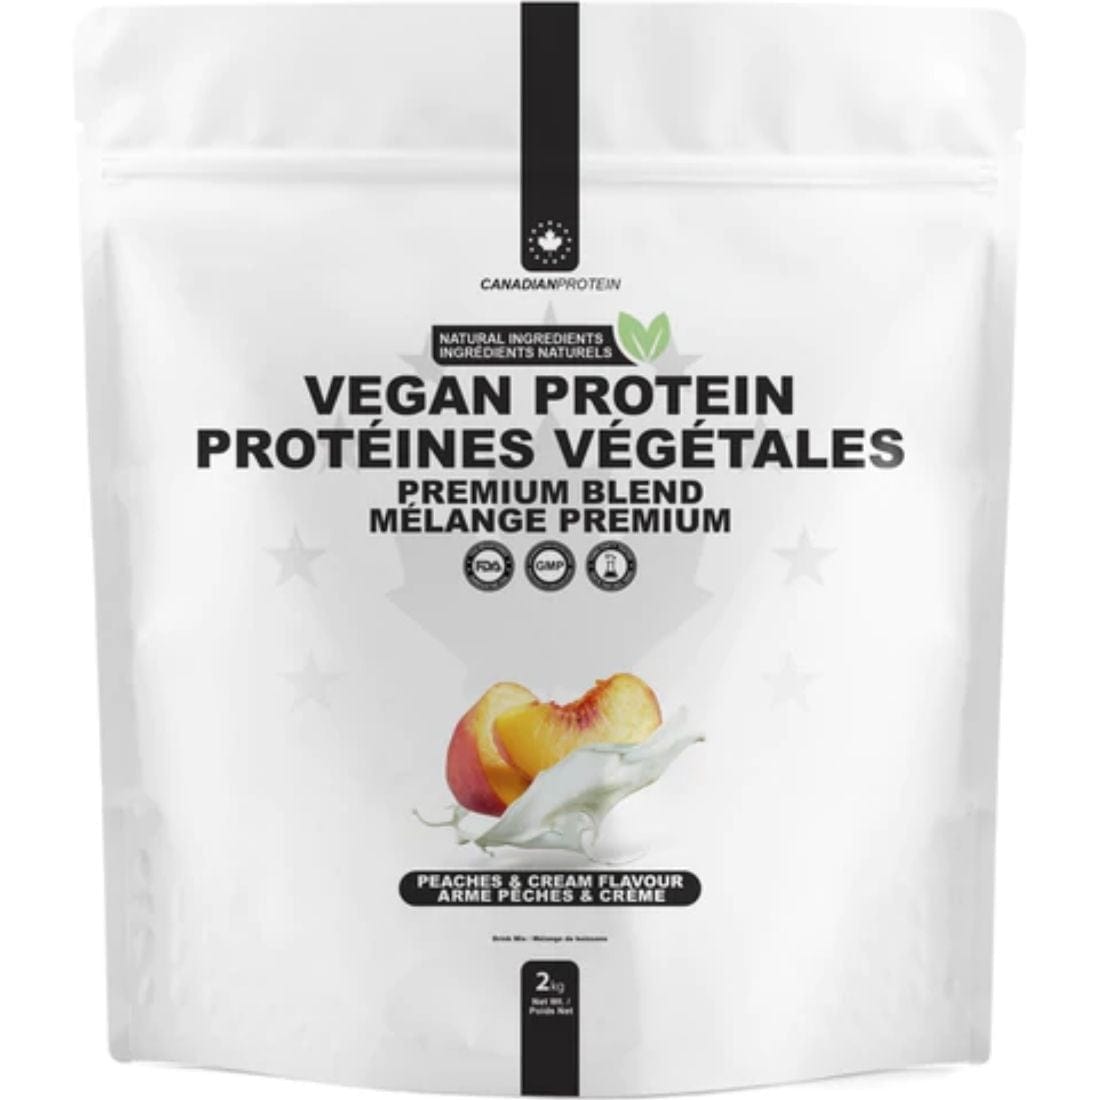 Canadian Protein All Natural Premium Vegan Protein Blend